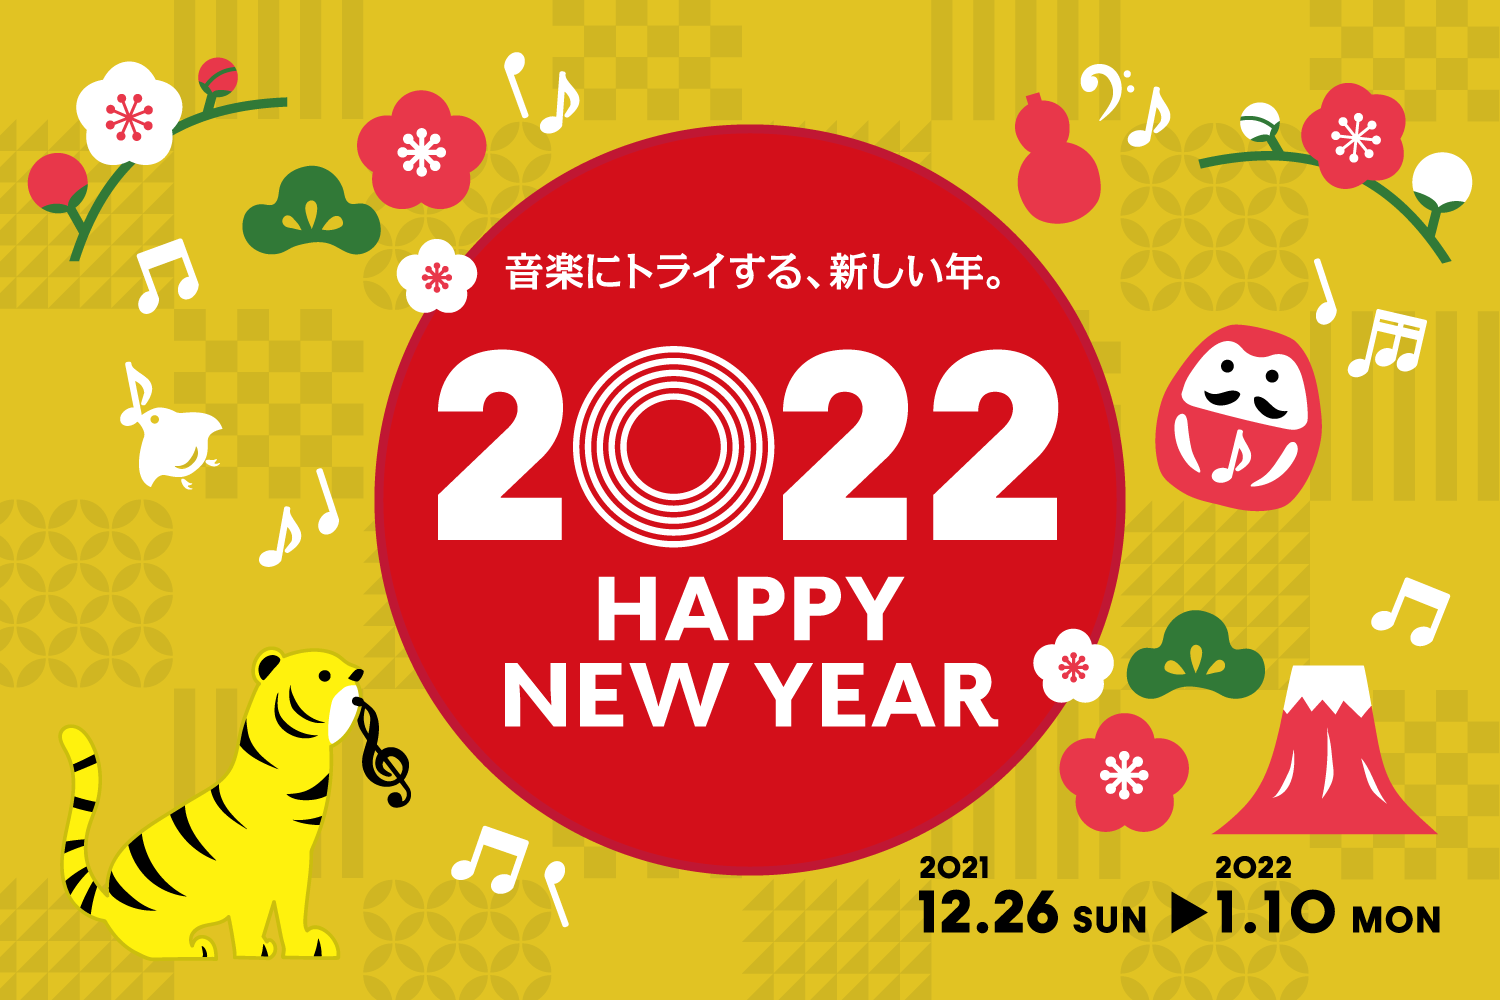 【HAPPY NEW YEAR 2022】年末年始セールのご案内